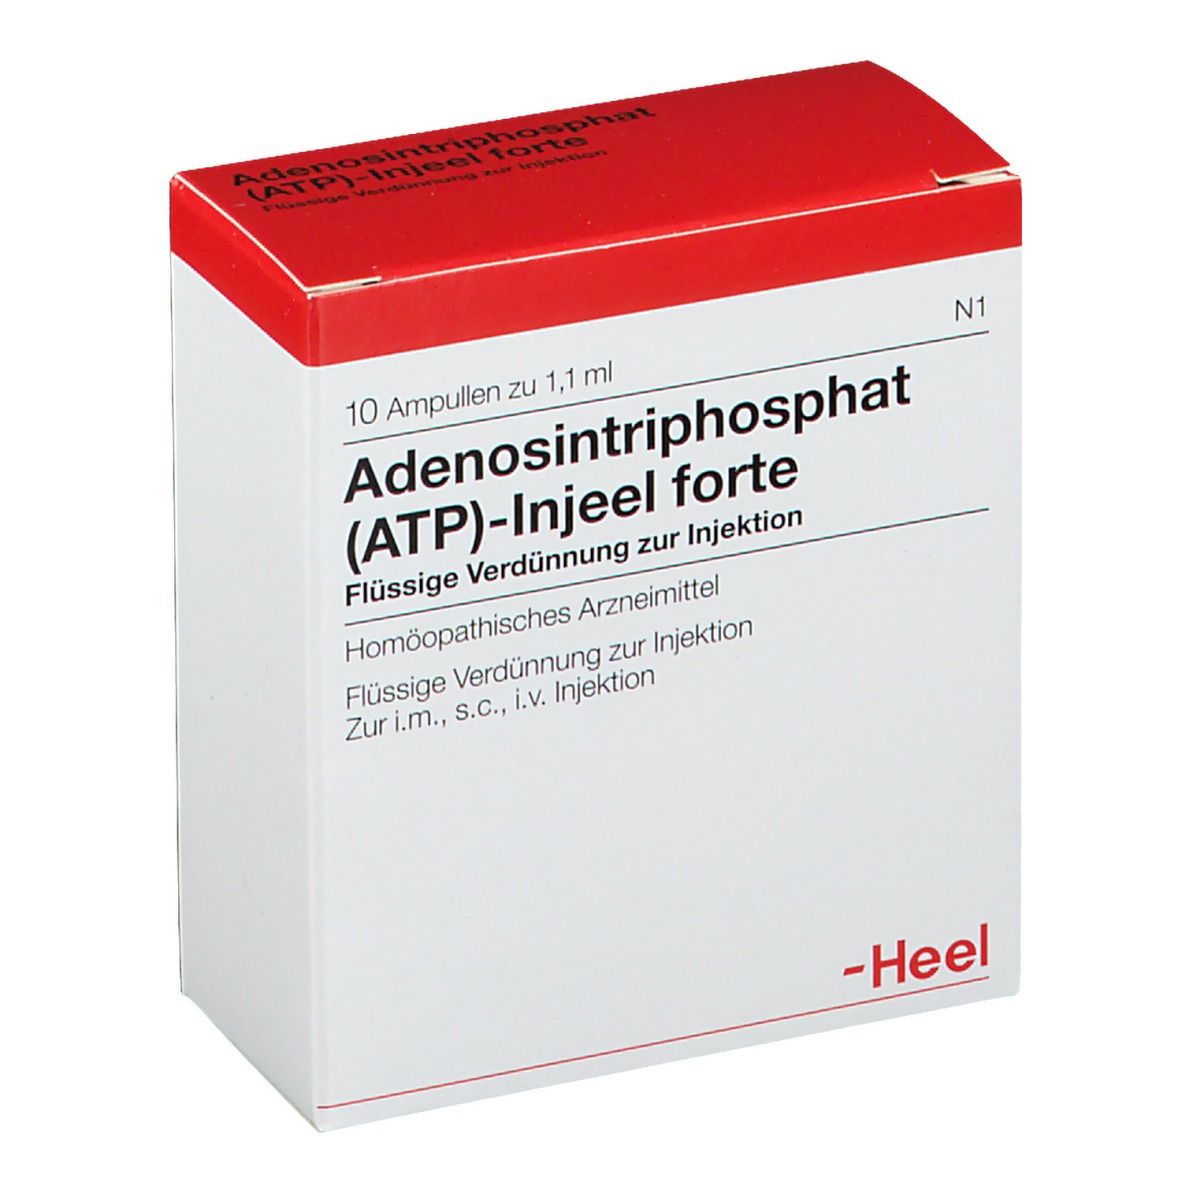 Adenosintriphosphat (ATP)-Injeel® forte Ampullen